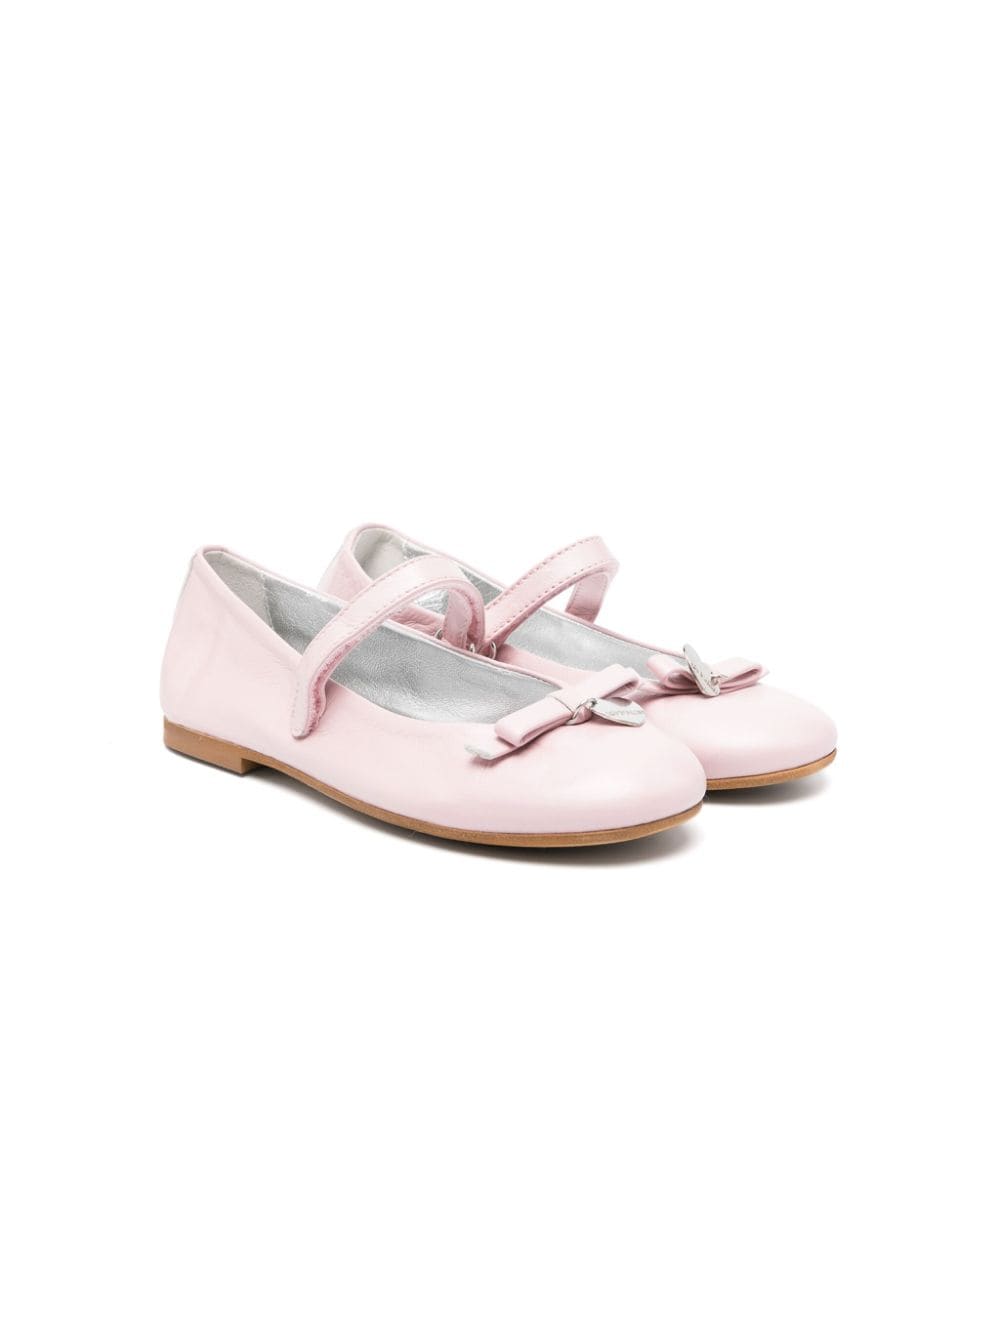 Monnalisa bow leather ballerina shoes - Pink von Monnalisa